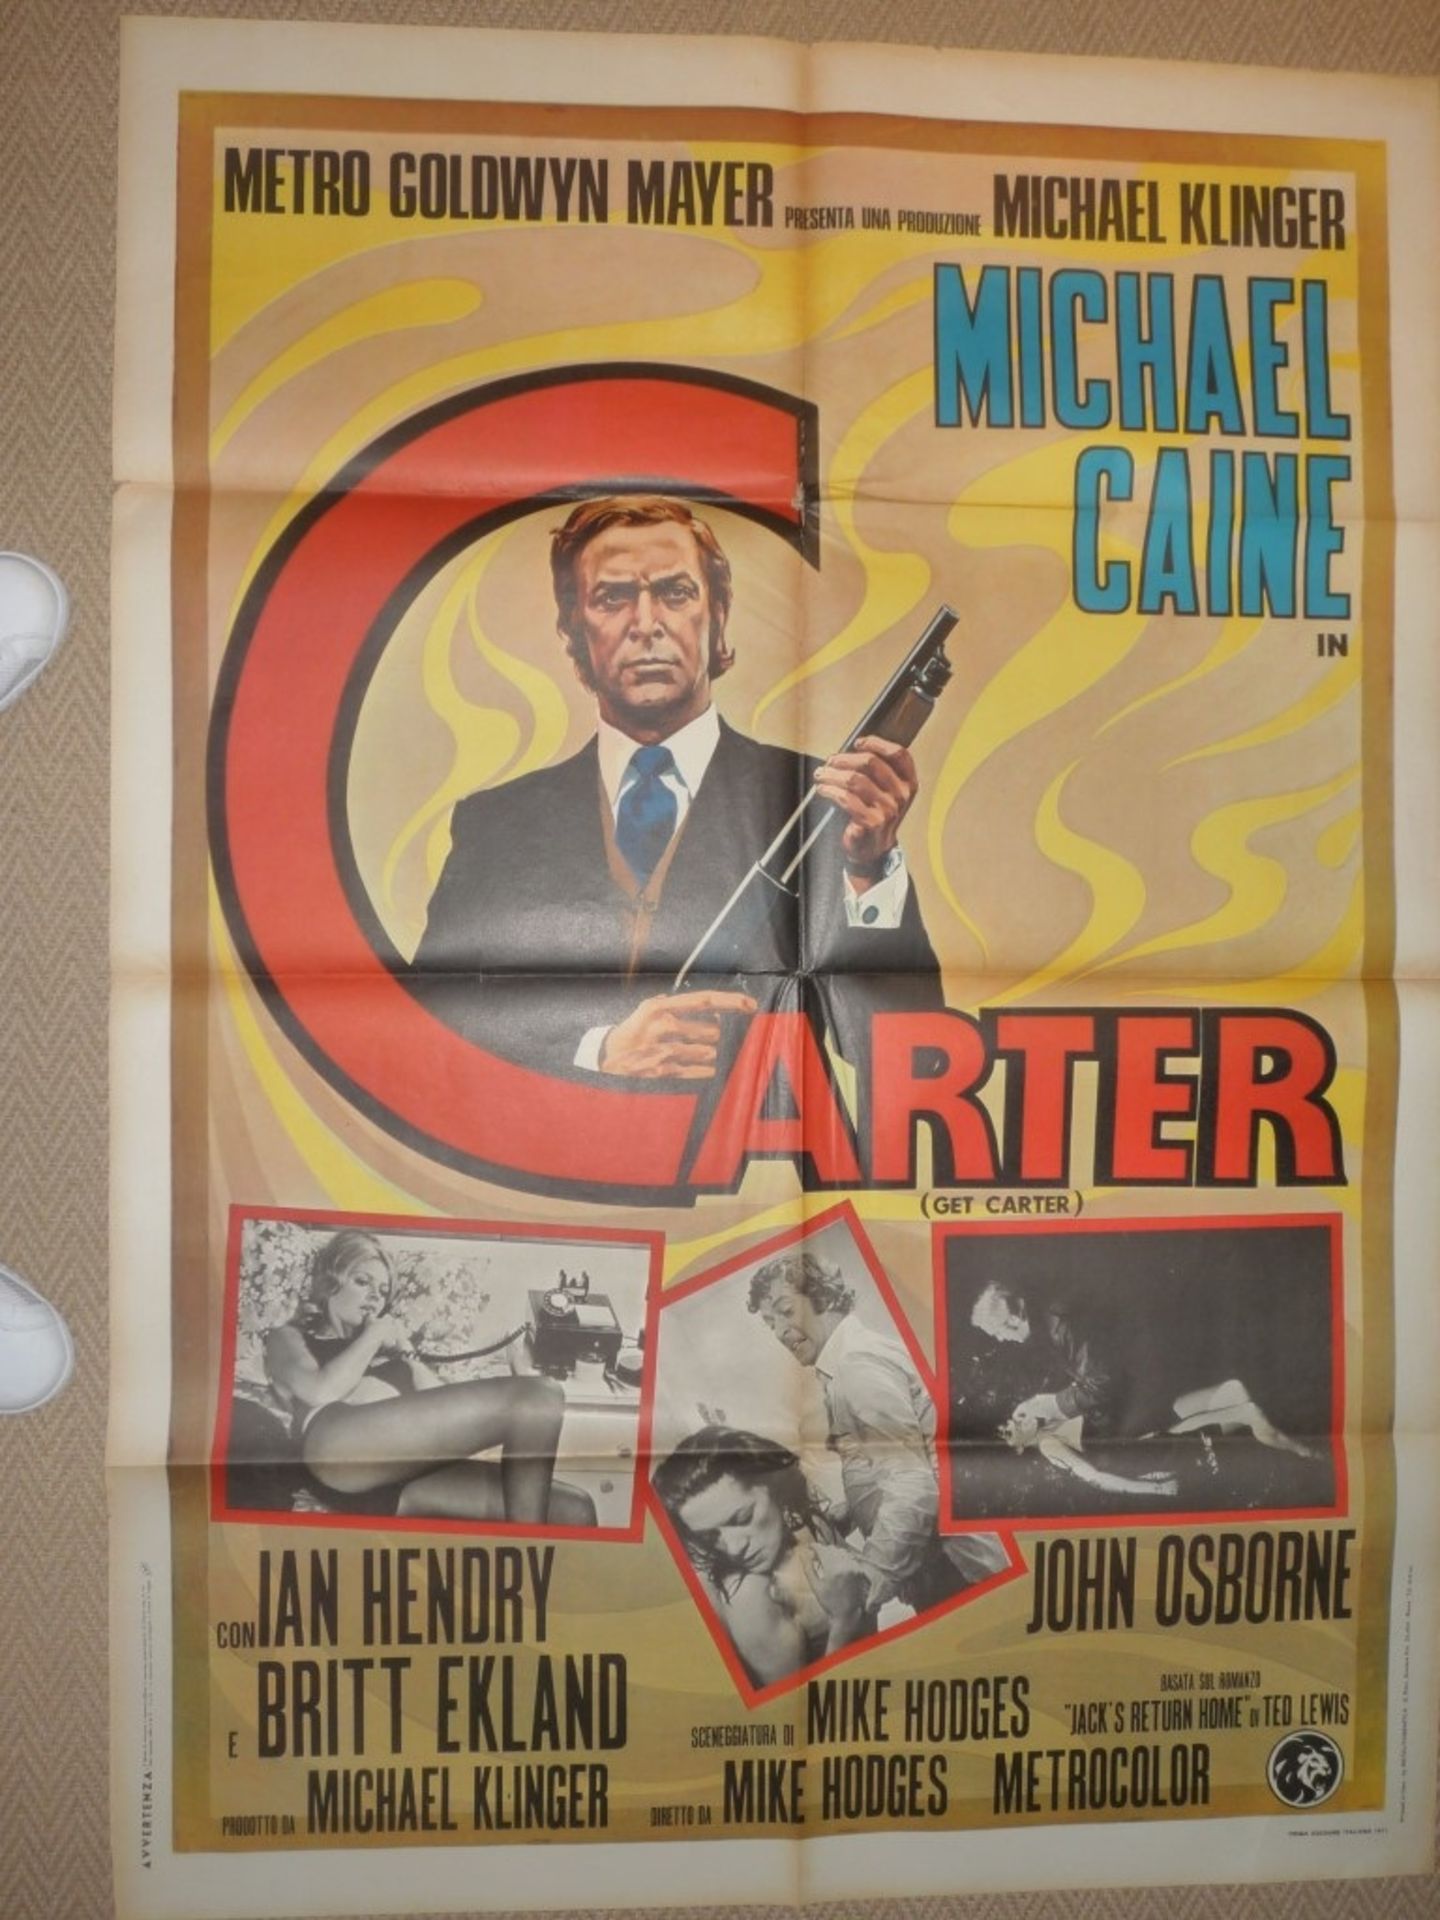 Get Carter poster